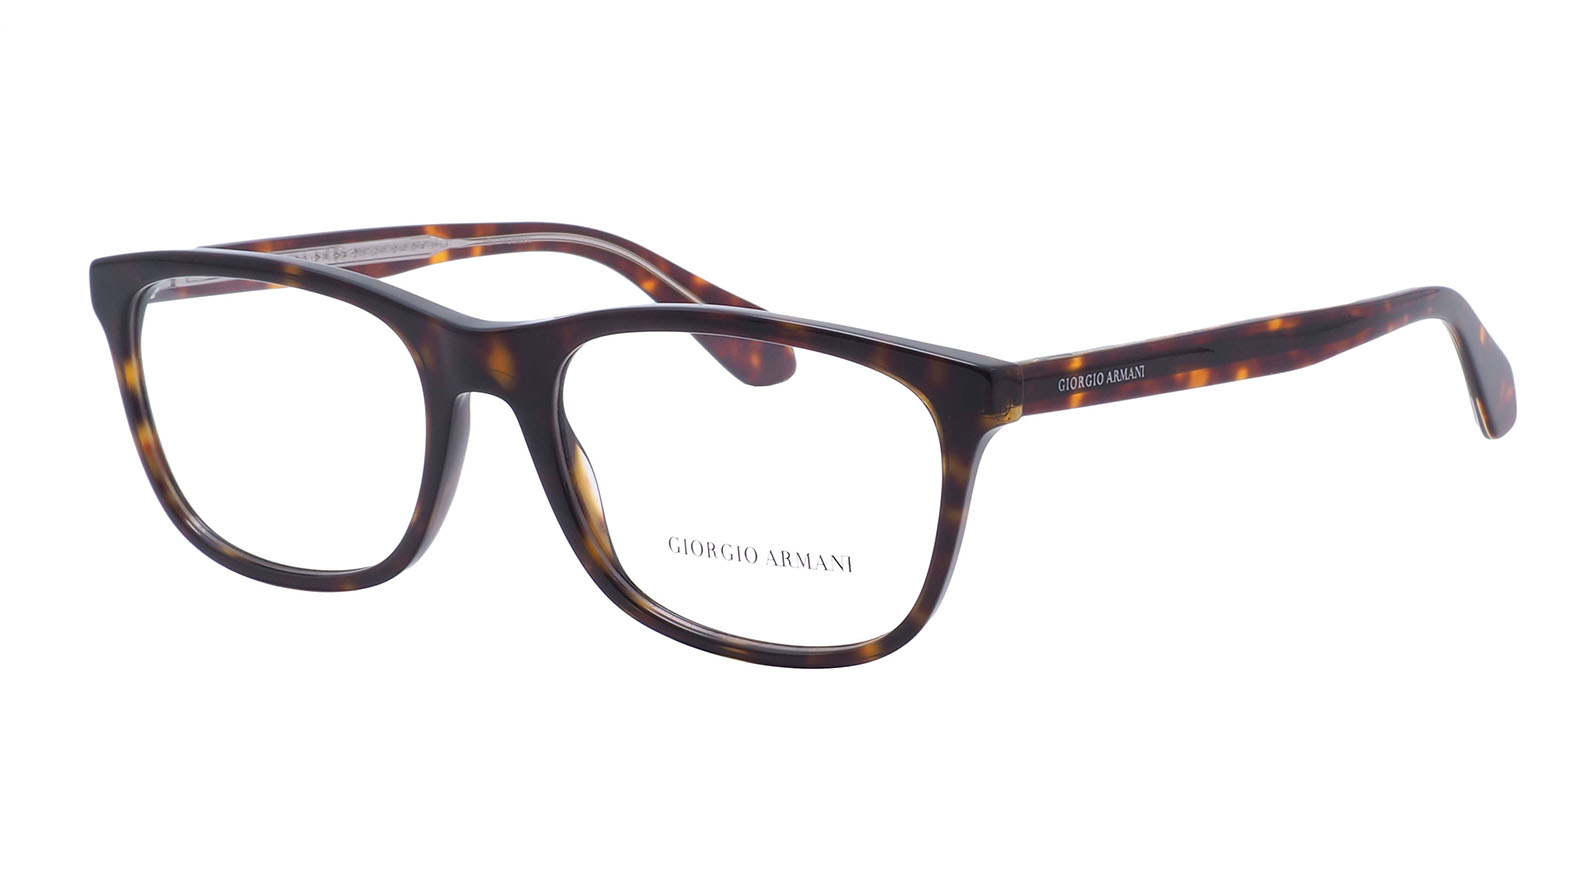 Giorgio Armani 7215 5879 карнавальный аксессуар очки волшебника